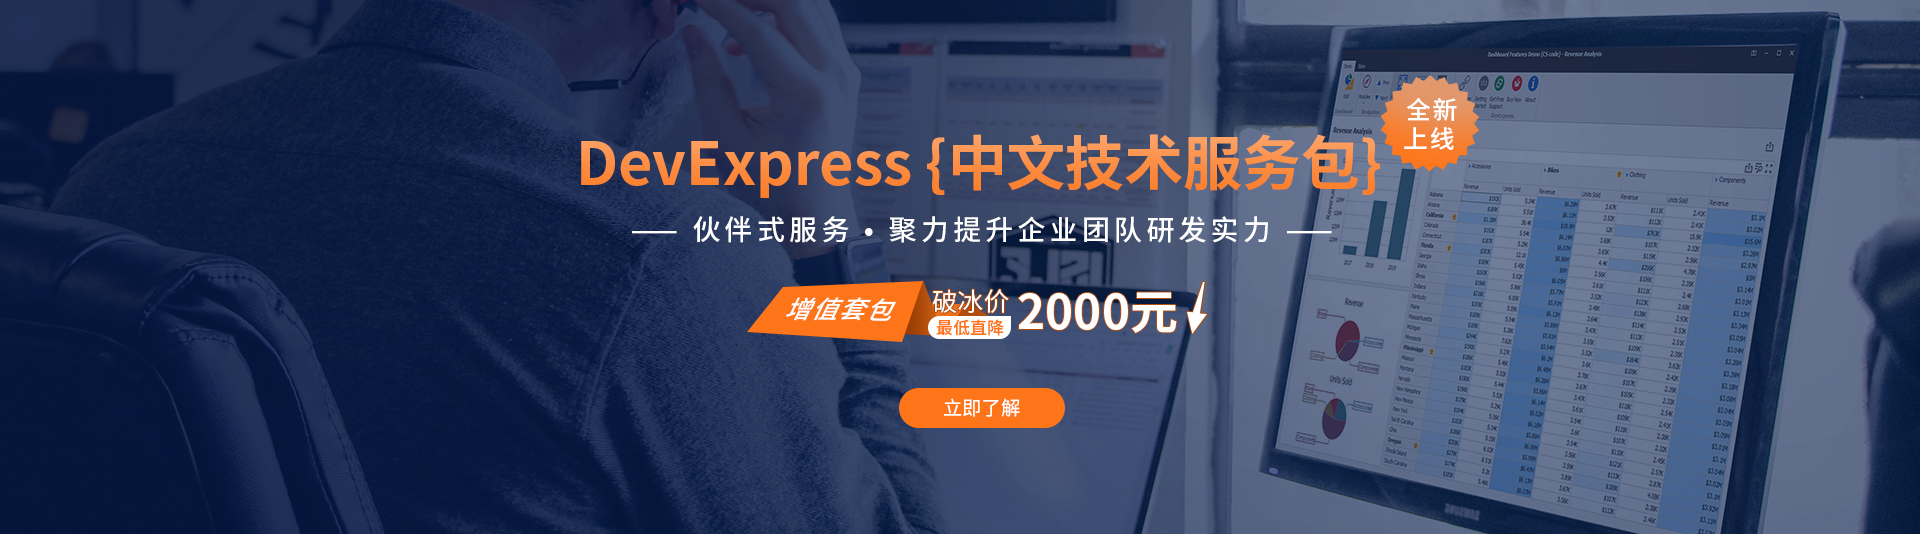 DevExpress中文技术服务包全新上线·享冰点折扣